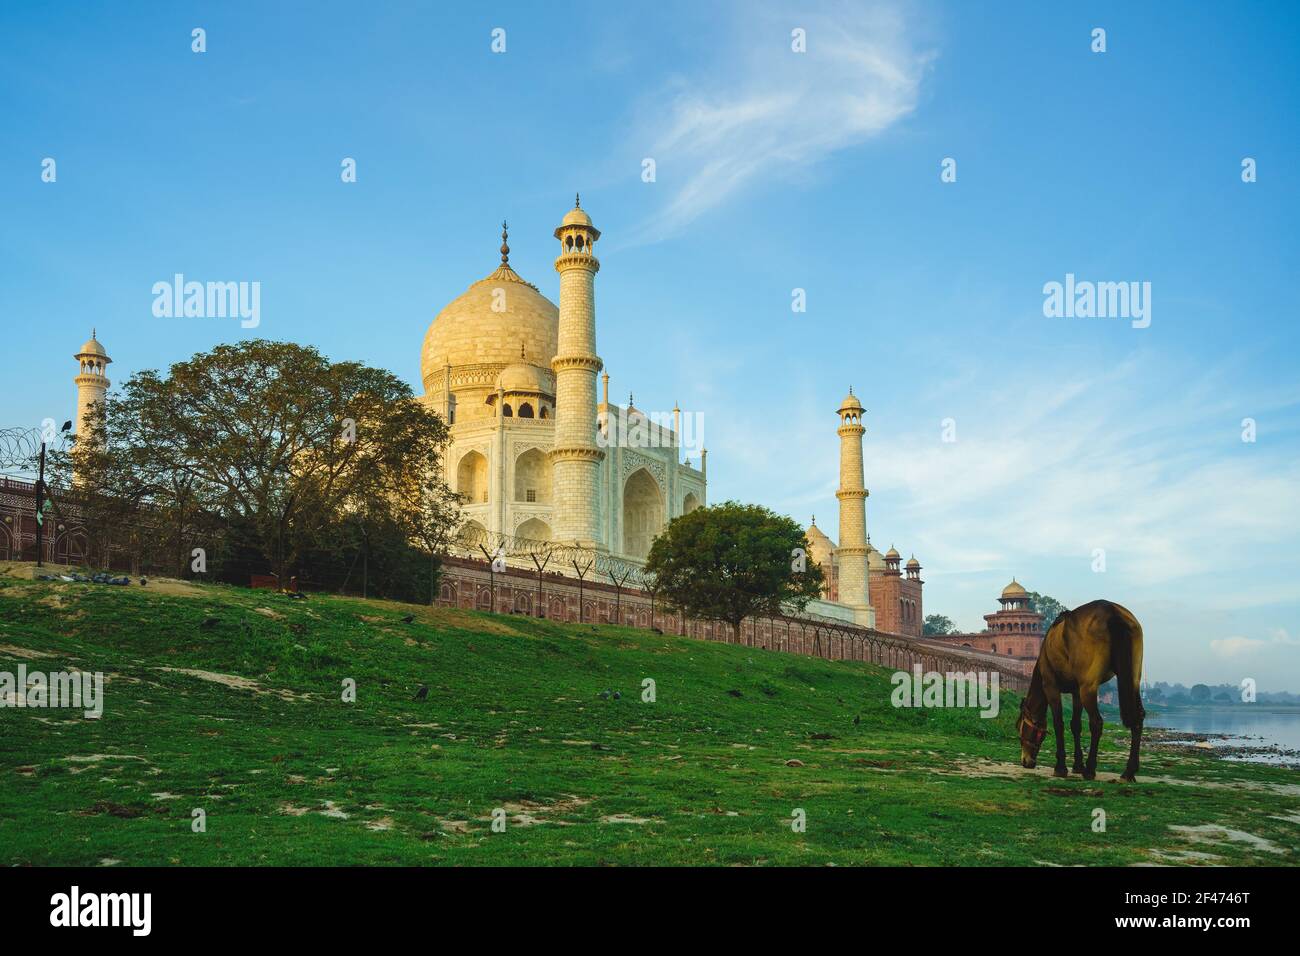 Taj Mahal, UNESCO world heritage site, in Agra, India at dusk Stock Photo